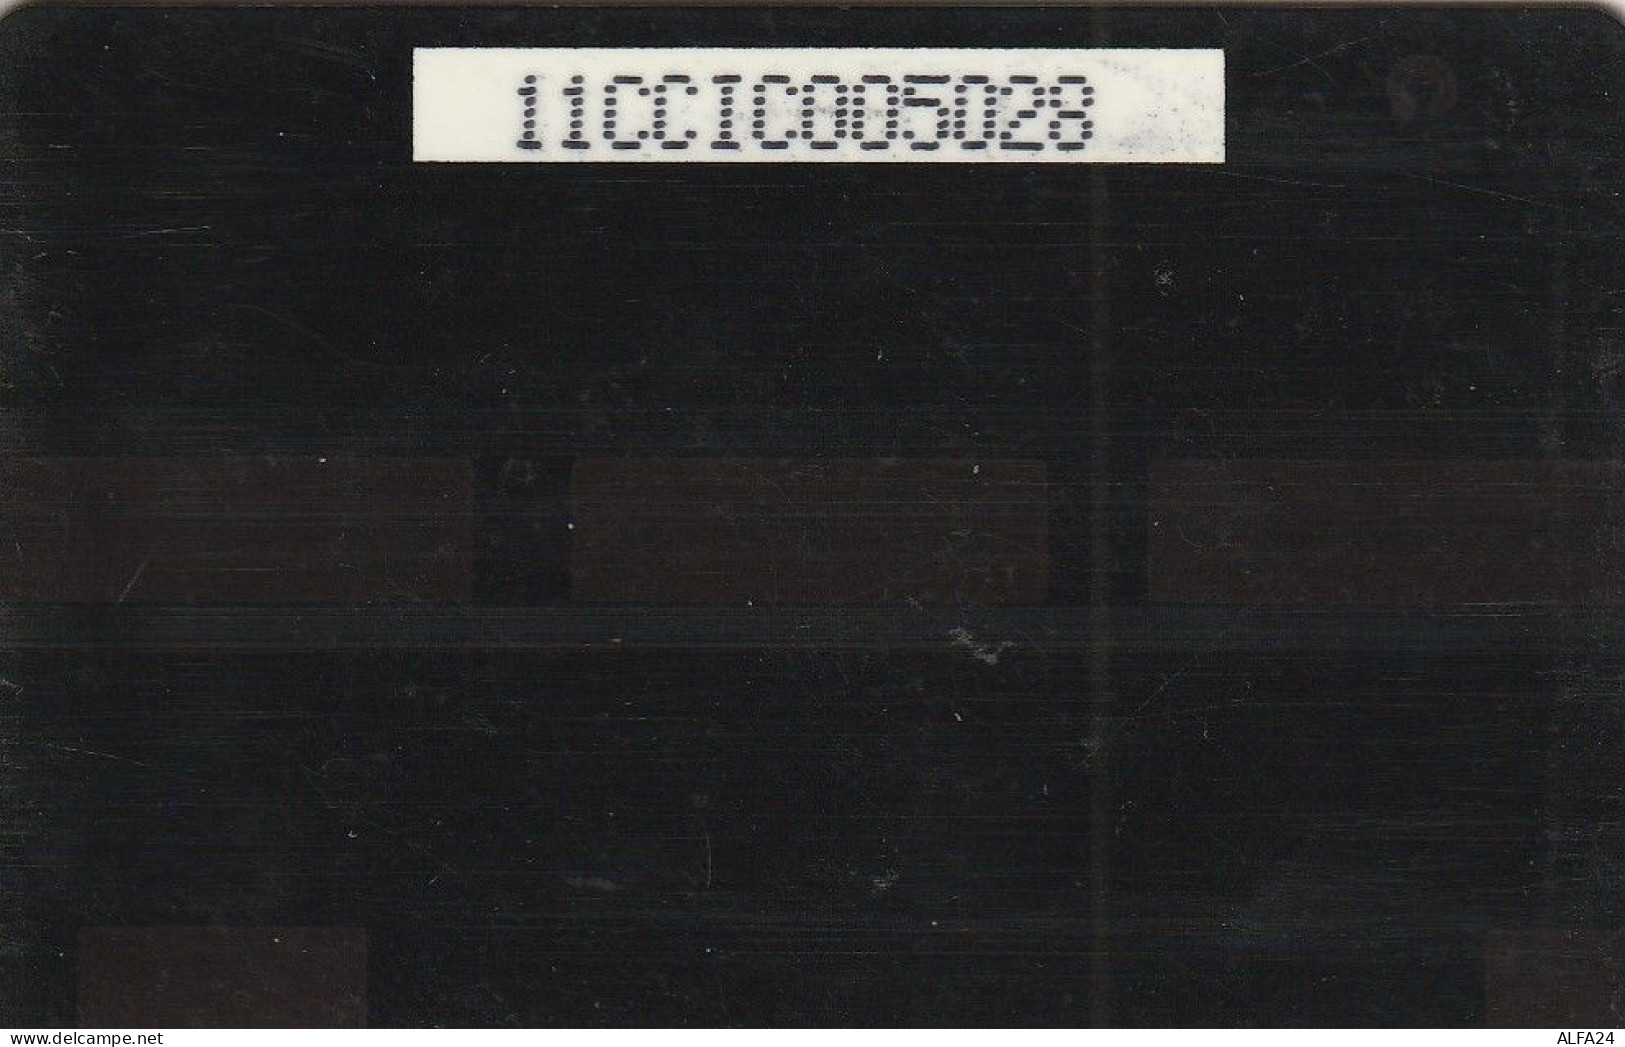 PHONE CARD CAYMAN ISLANDS  (E49.51.7 - Isole Caiman